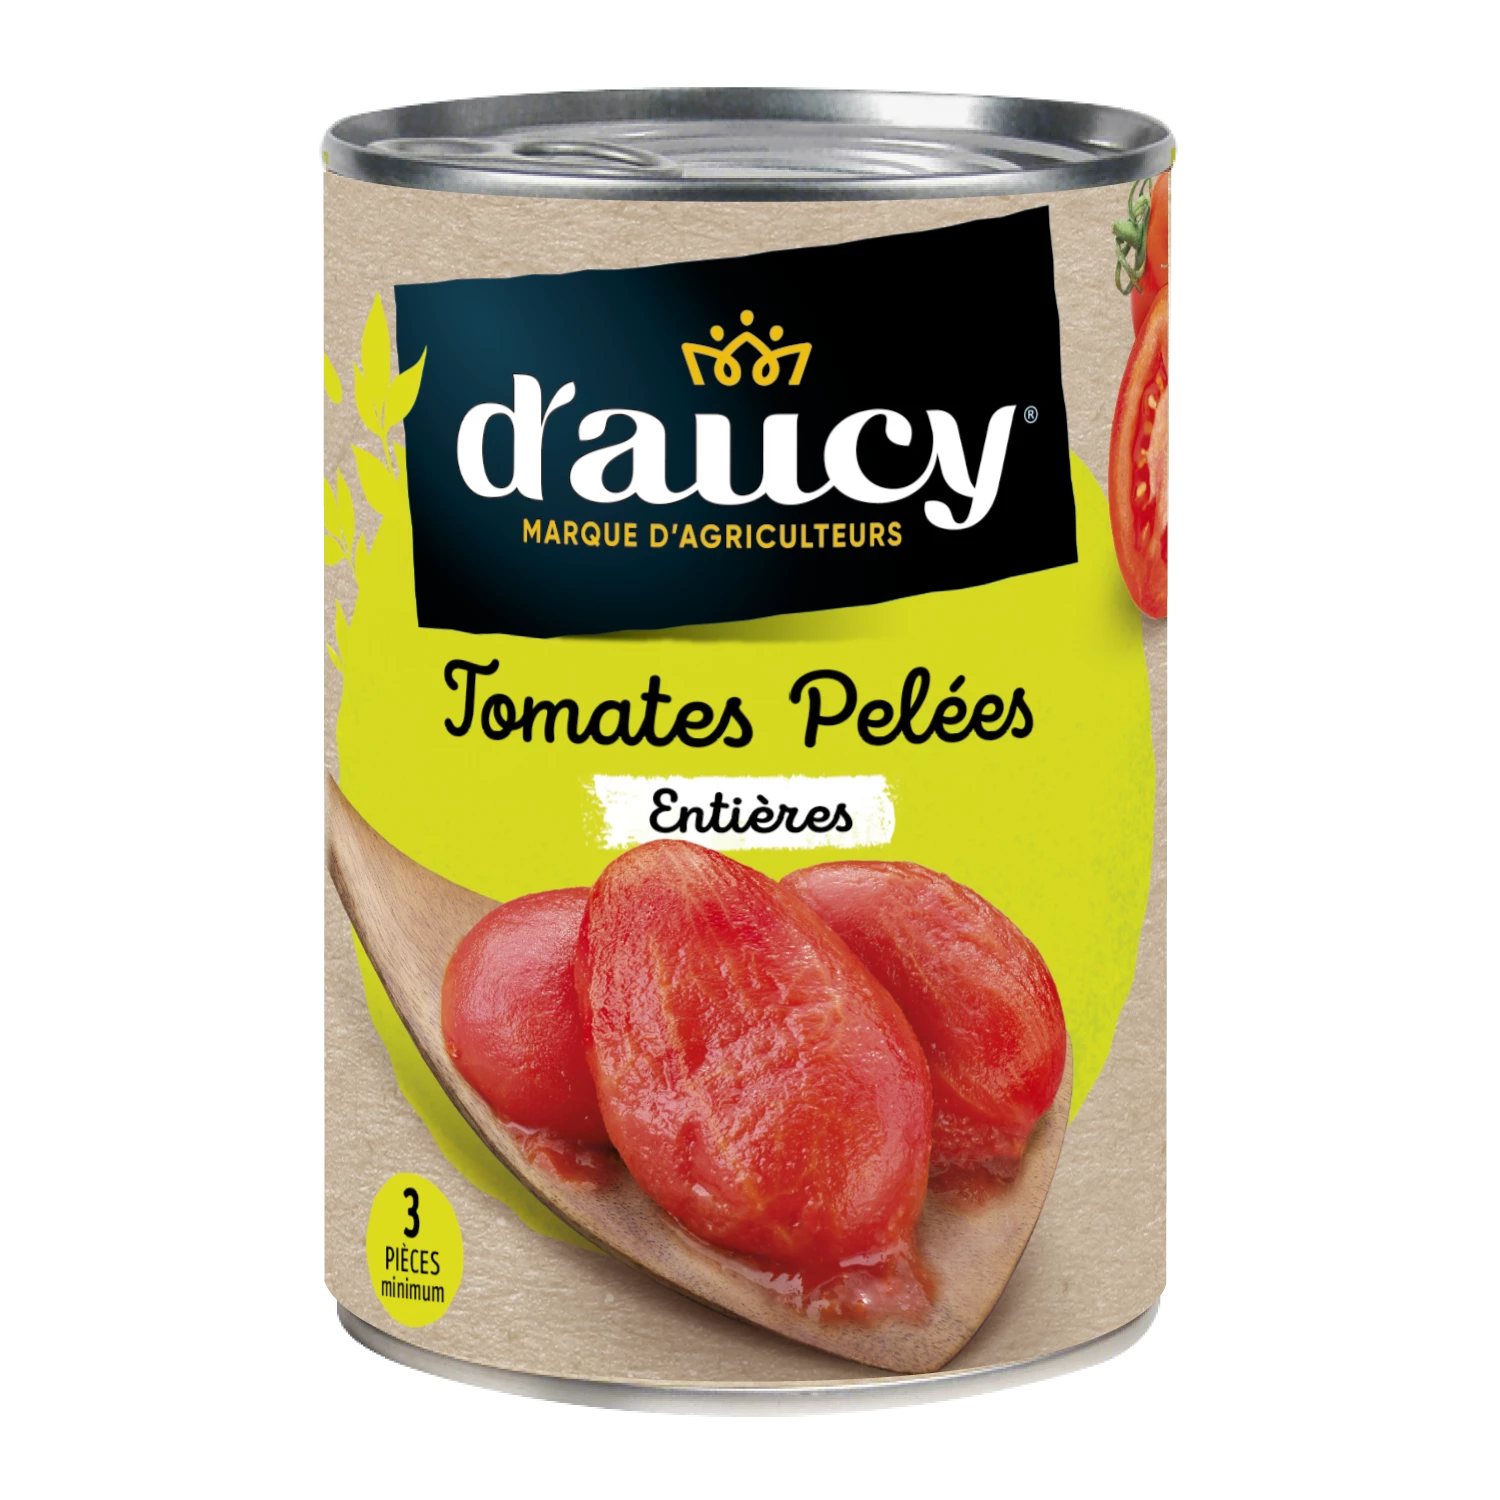 L Daucy Peeled Tomatoes 383g